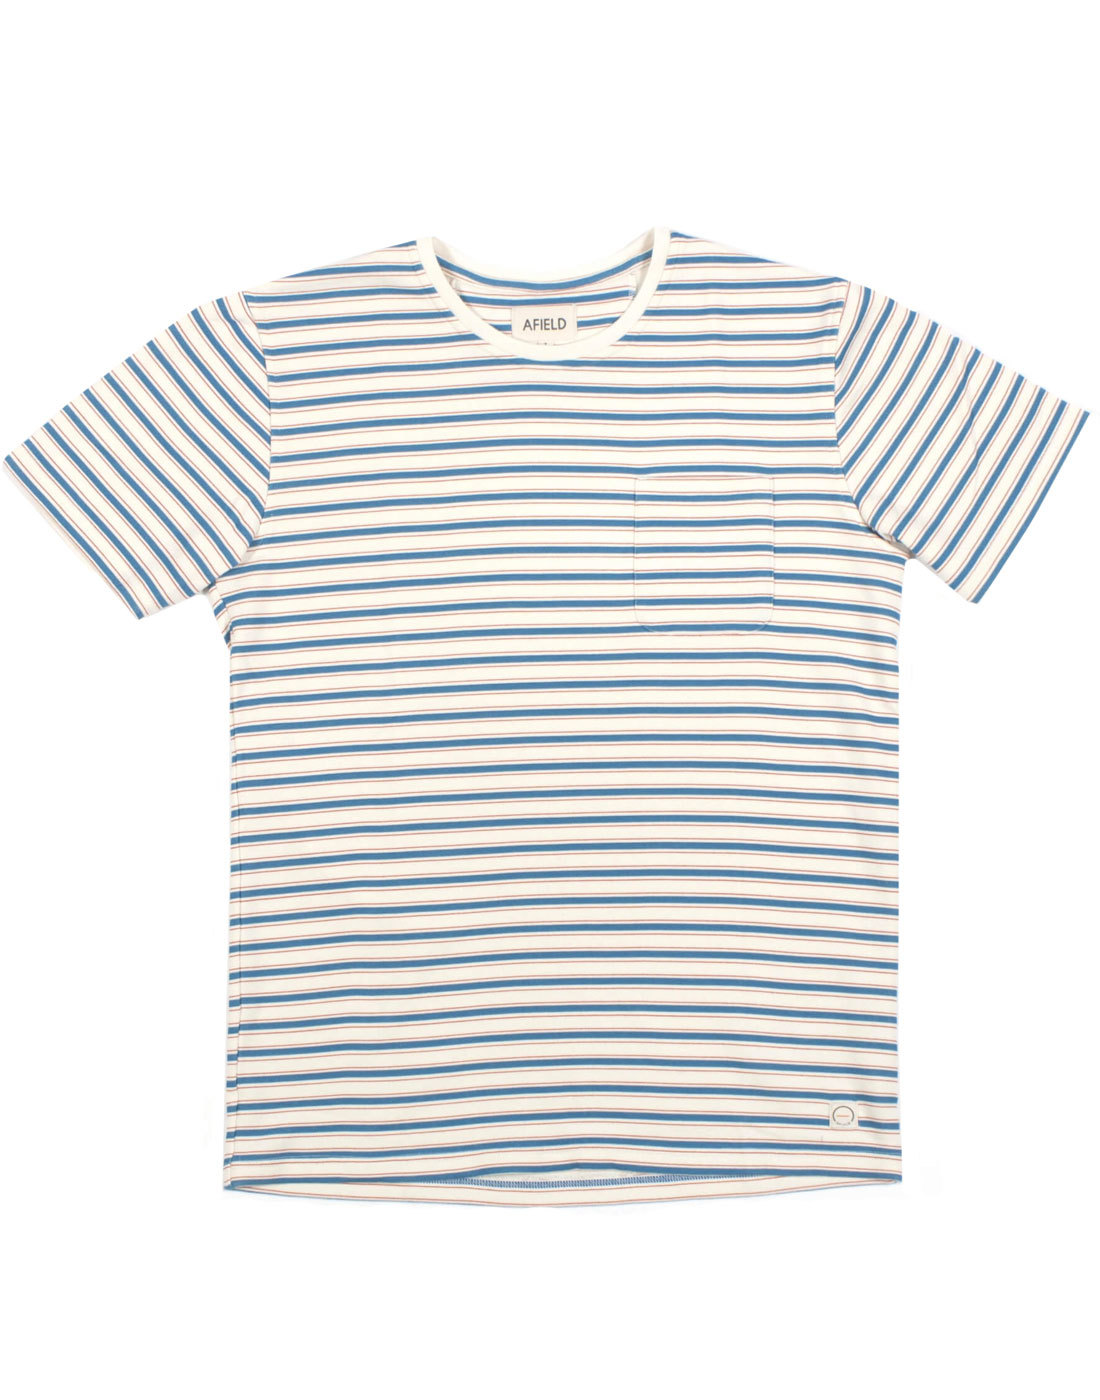 AFIELD Retro Mod Woven Terry Stripe Pocket T-shirt